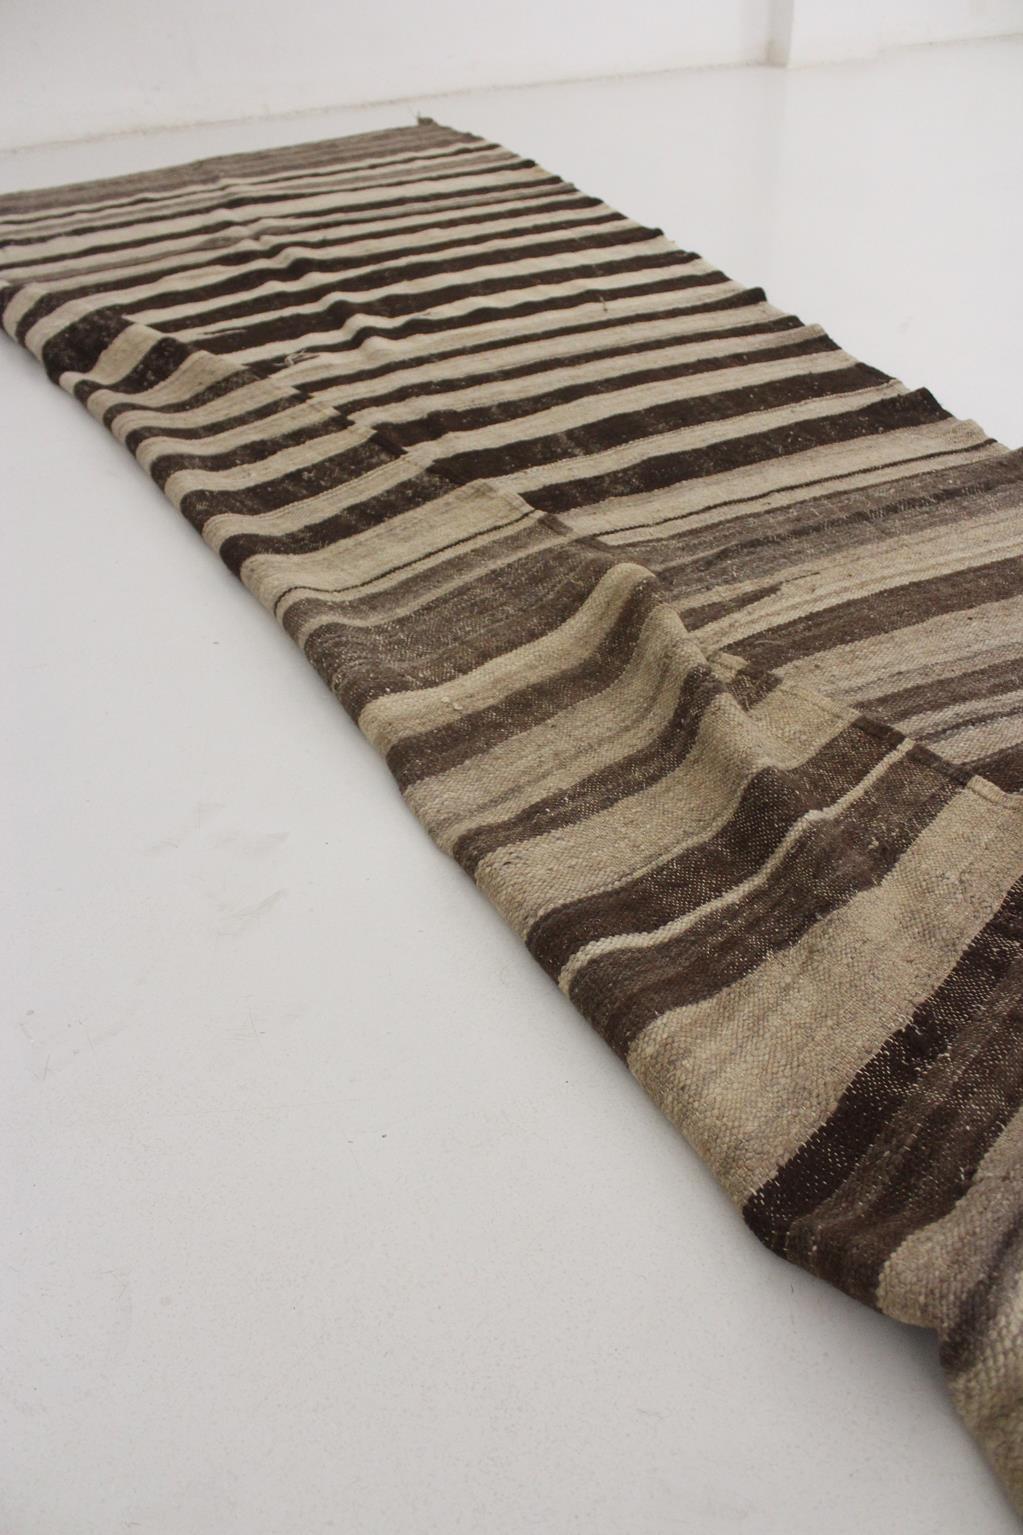 Vintage Moroccan Kilim rug - Stripes in beige+brown - 4.6x14.4feet / 142x440cm For Sale 8